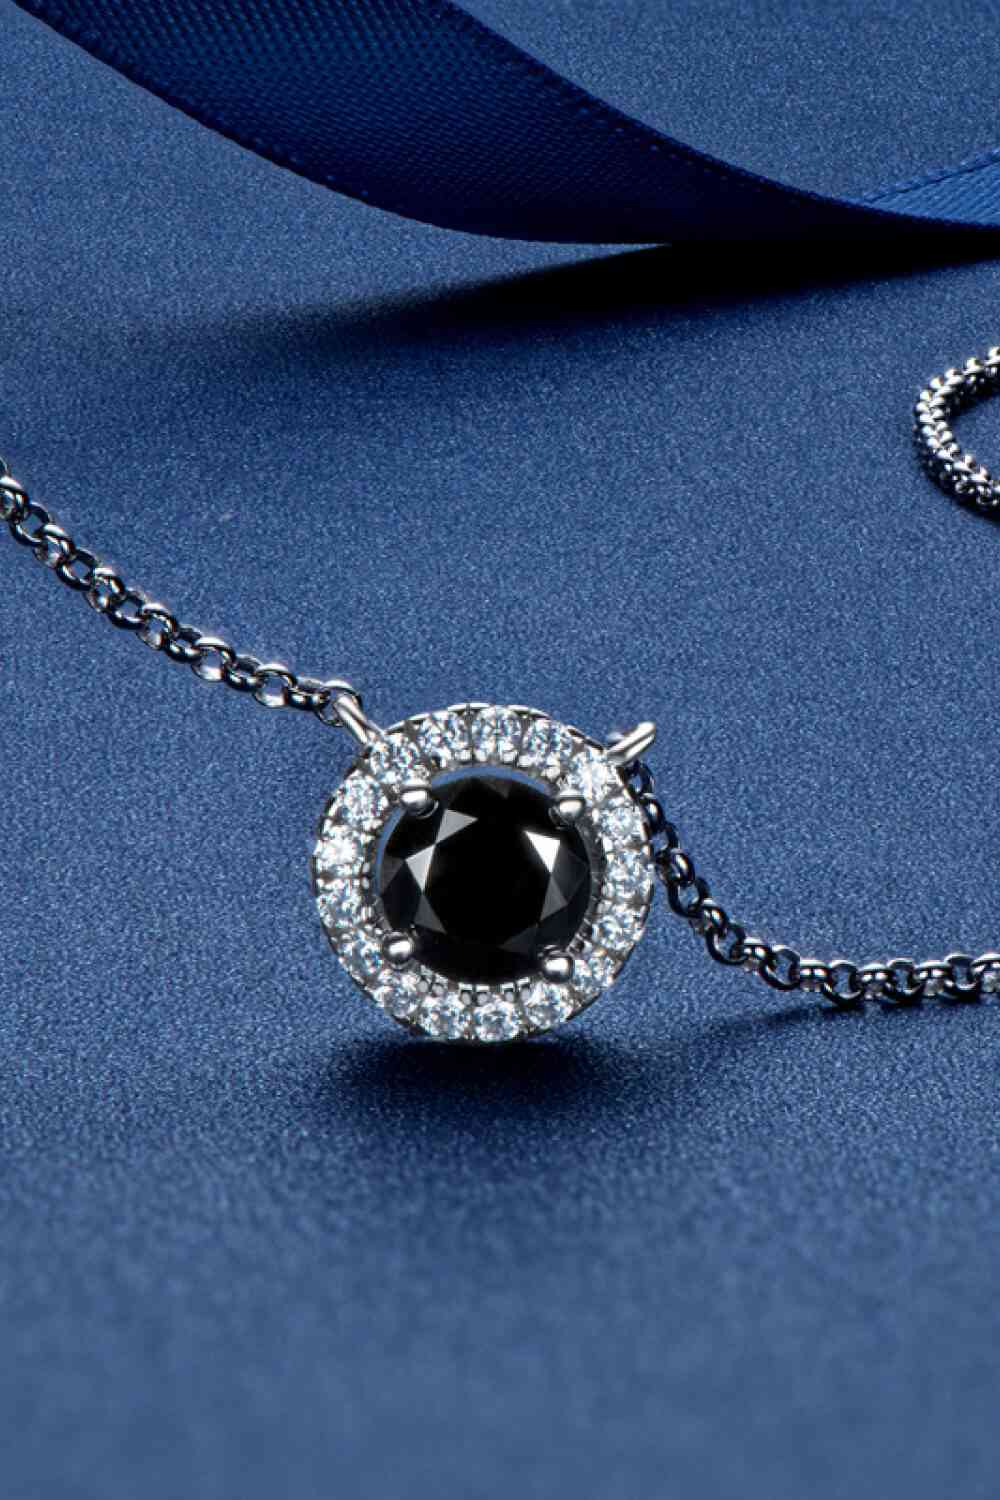 1 carat black moissanite stone pendant set in platinum plated sterling